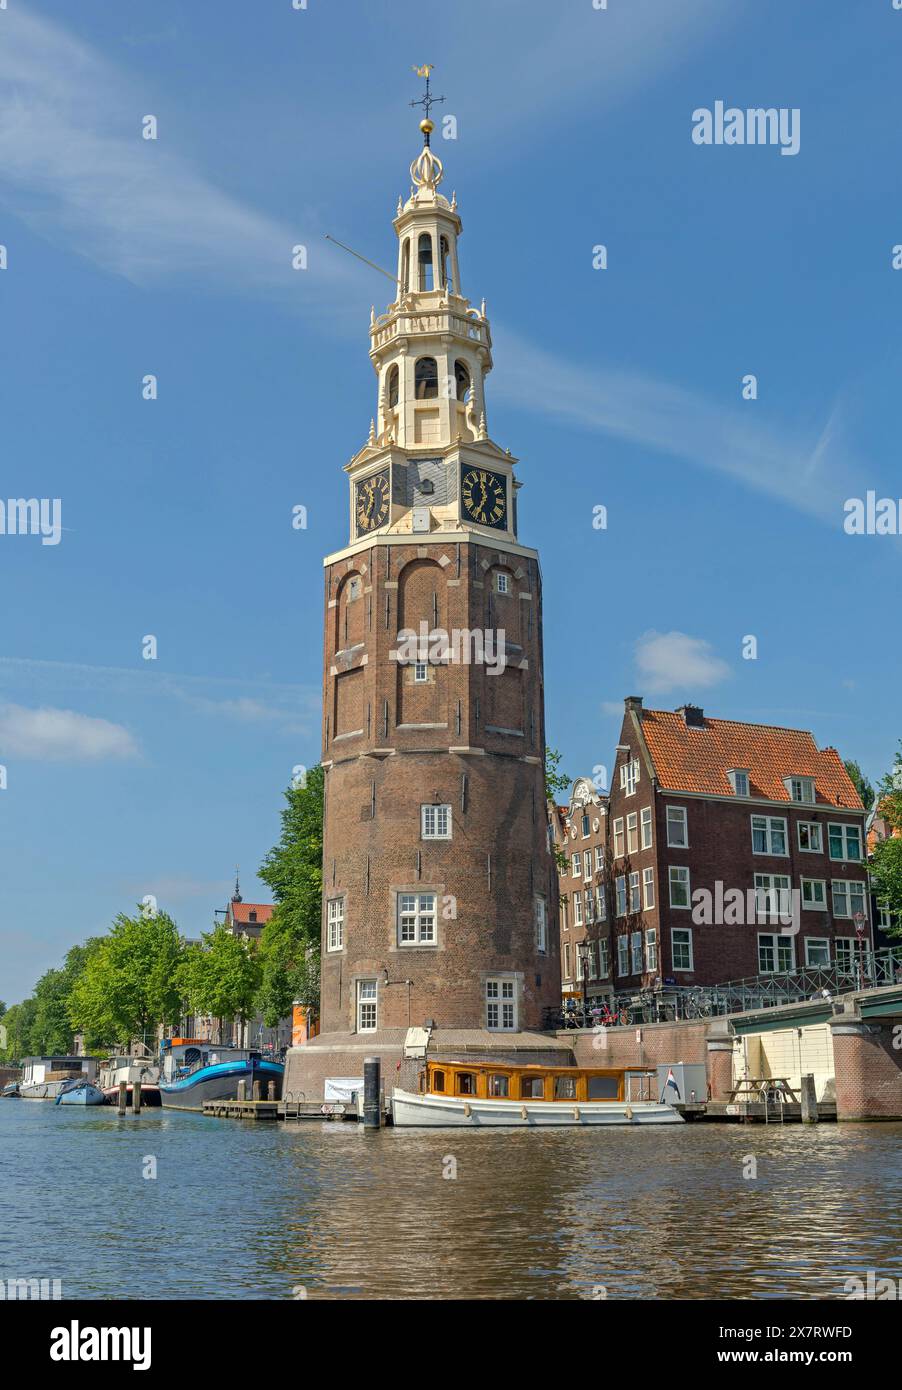 Amsterdam, Niederlande - 17. Mai 2018: Montelbaanstoren Tower Landmark am Ufer des Oudeschans Canal am sonnigen Frühlingstag. Stockfoto